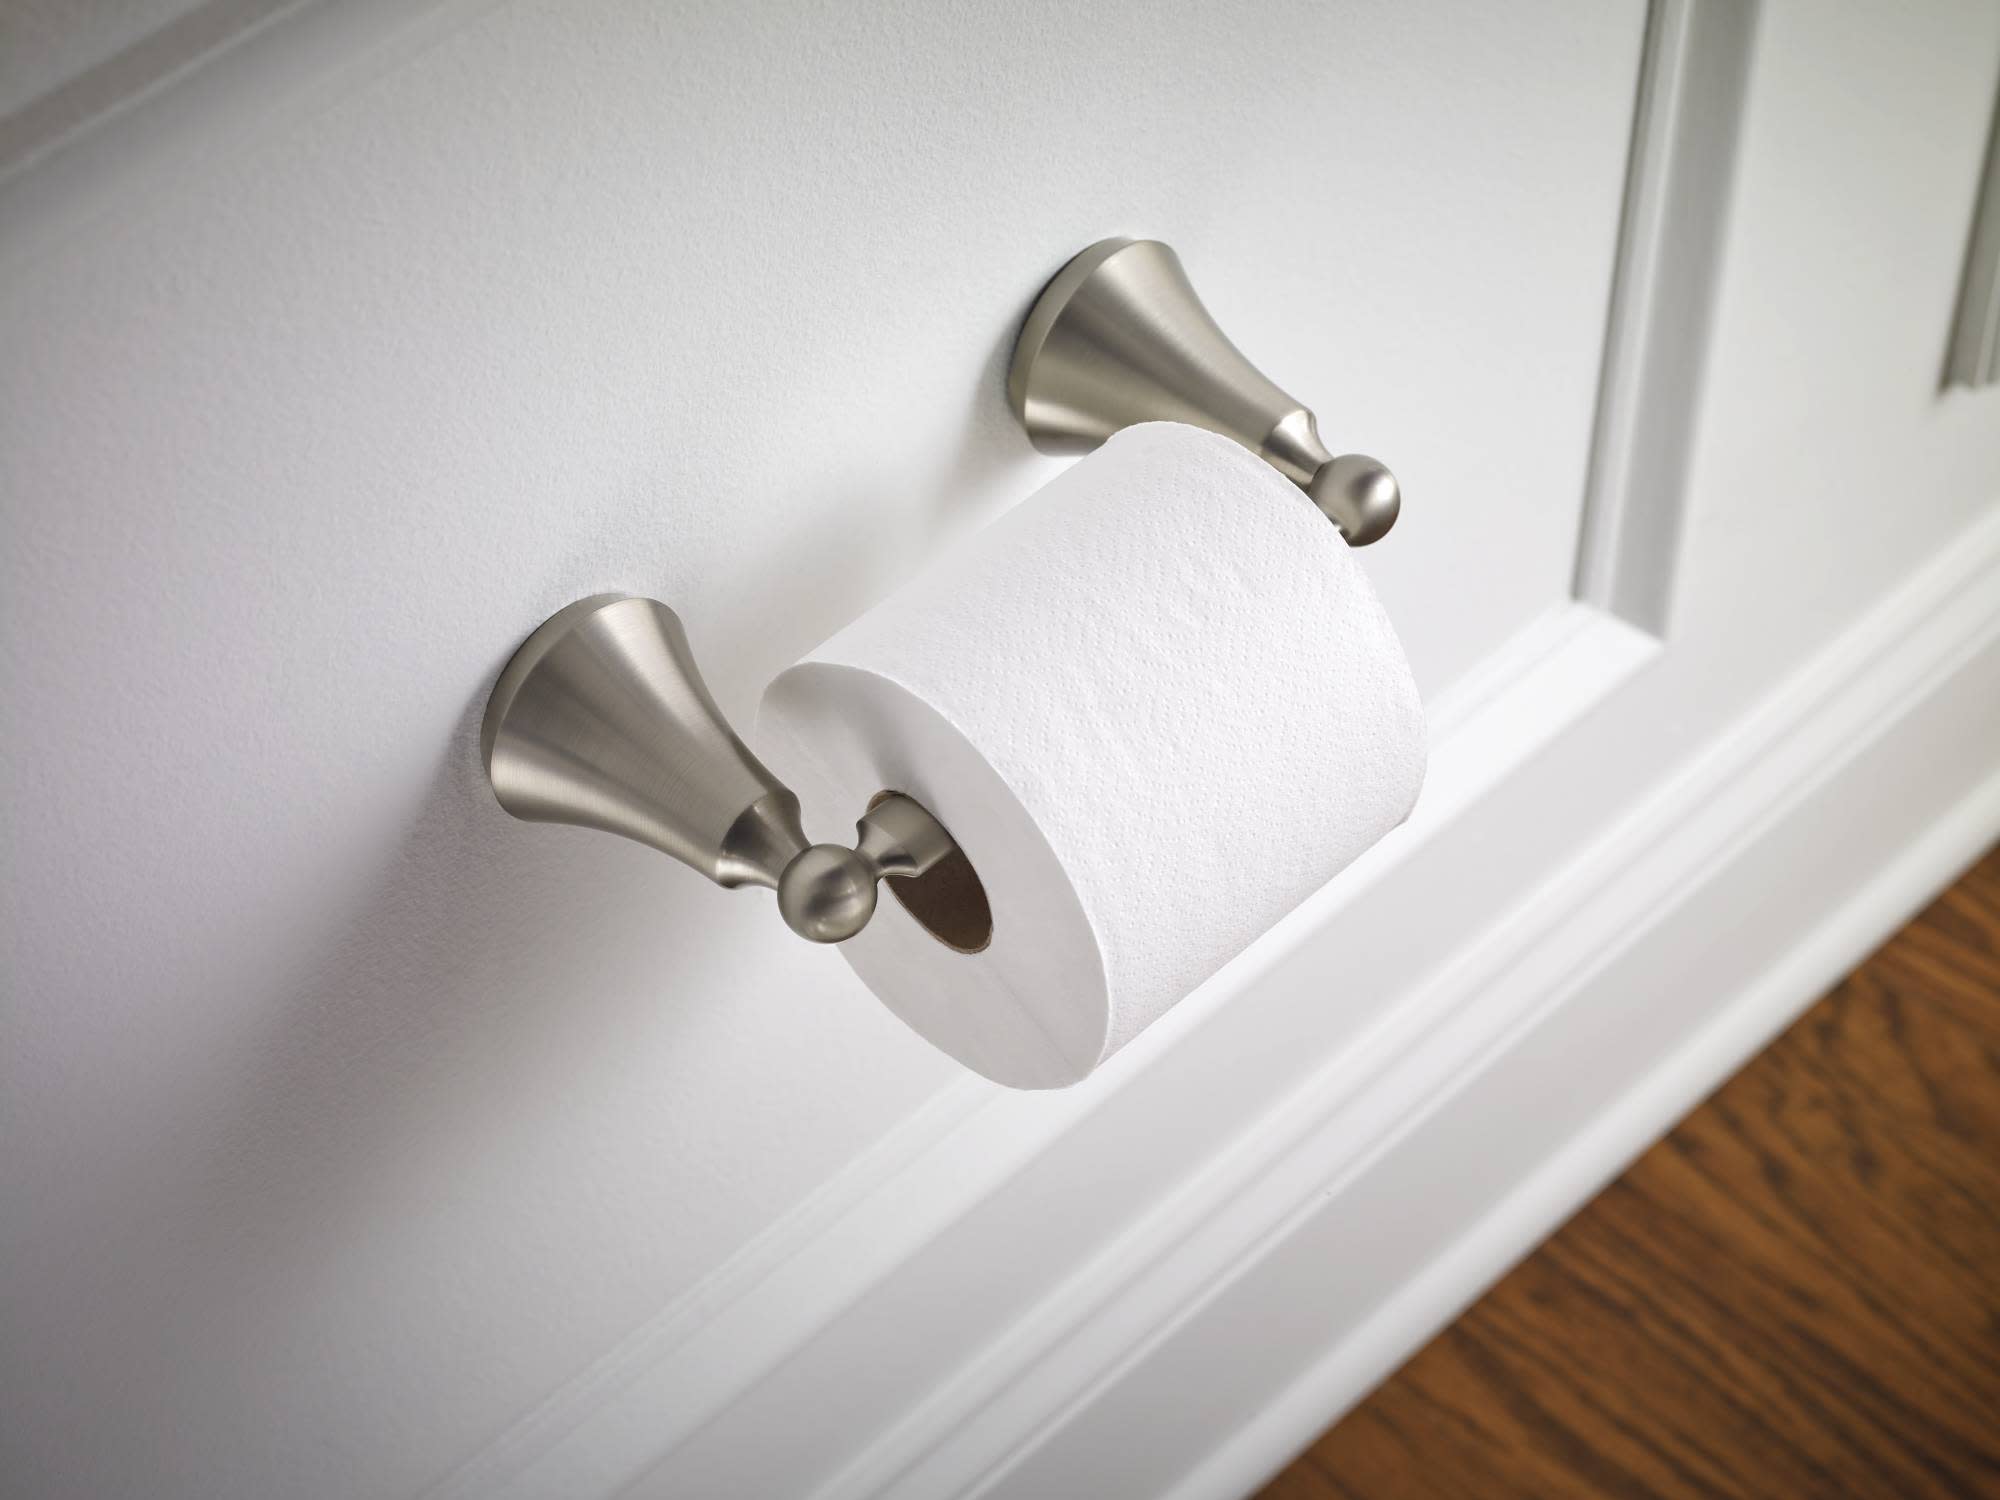 How To Remove Moen Toilet Paper Holder